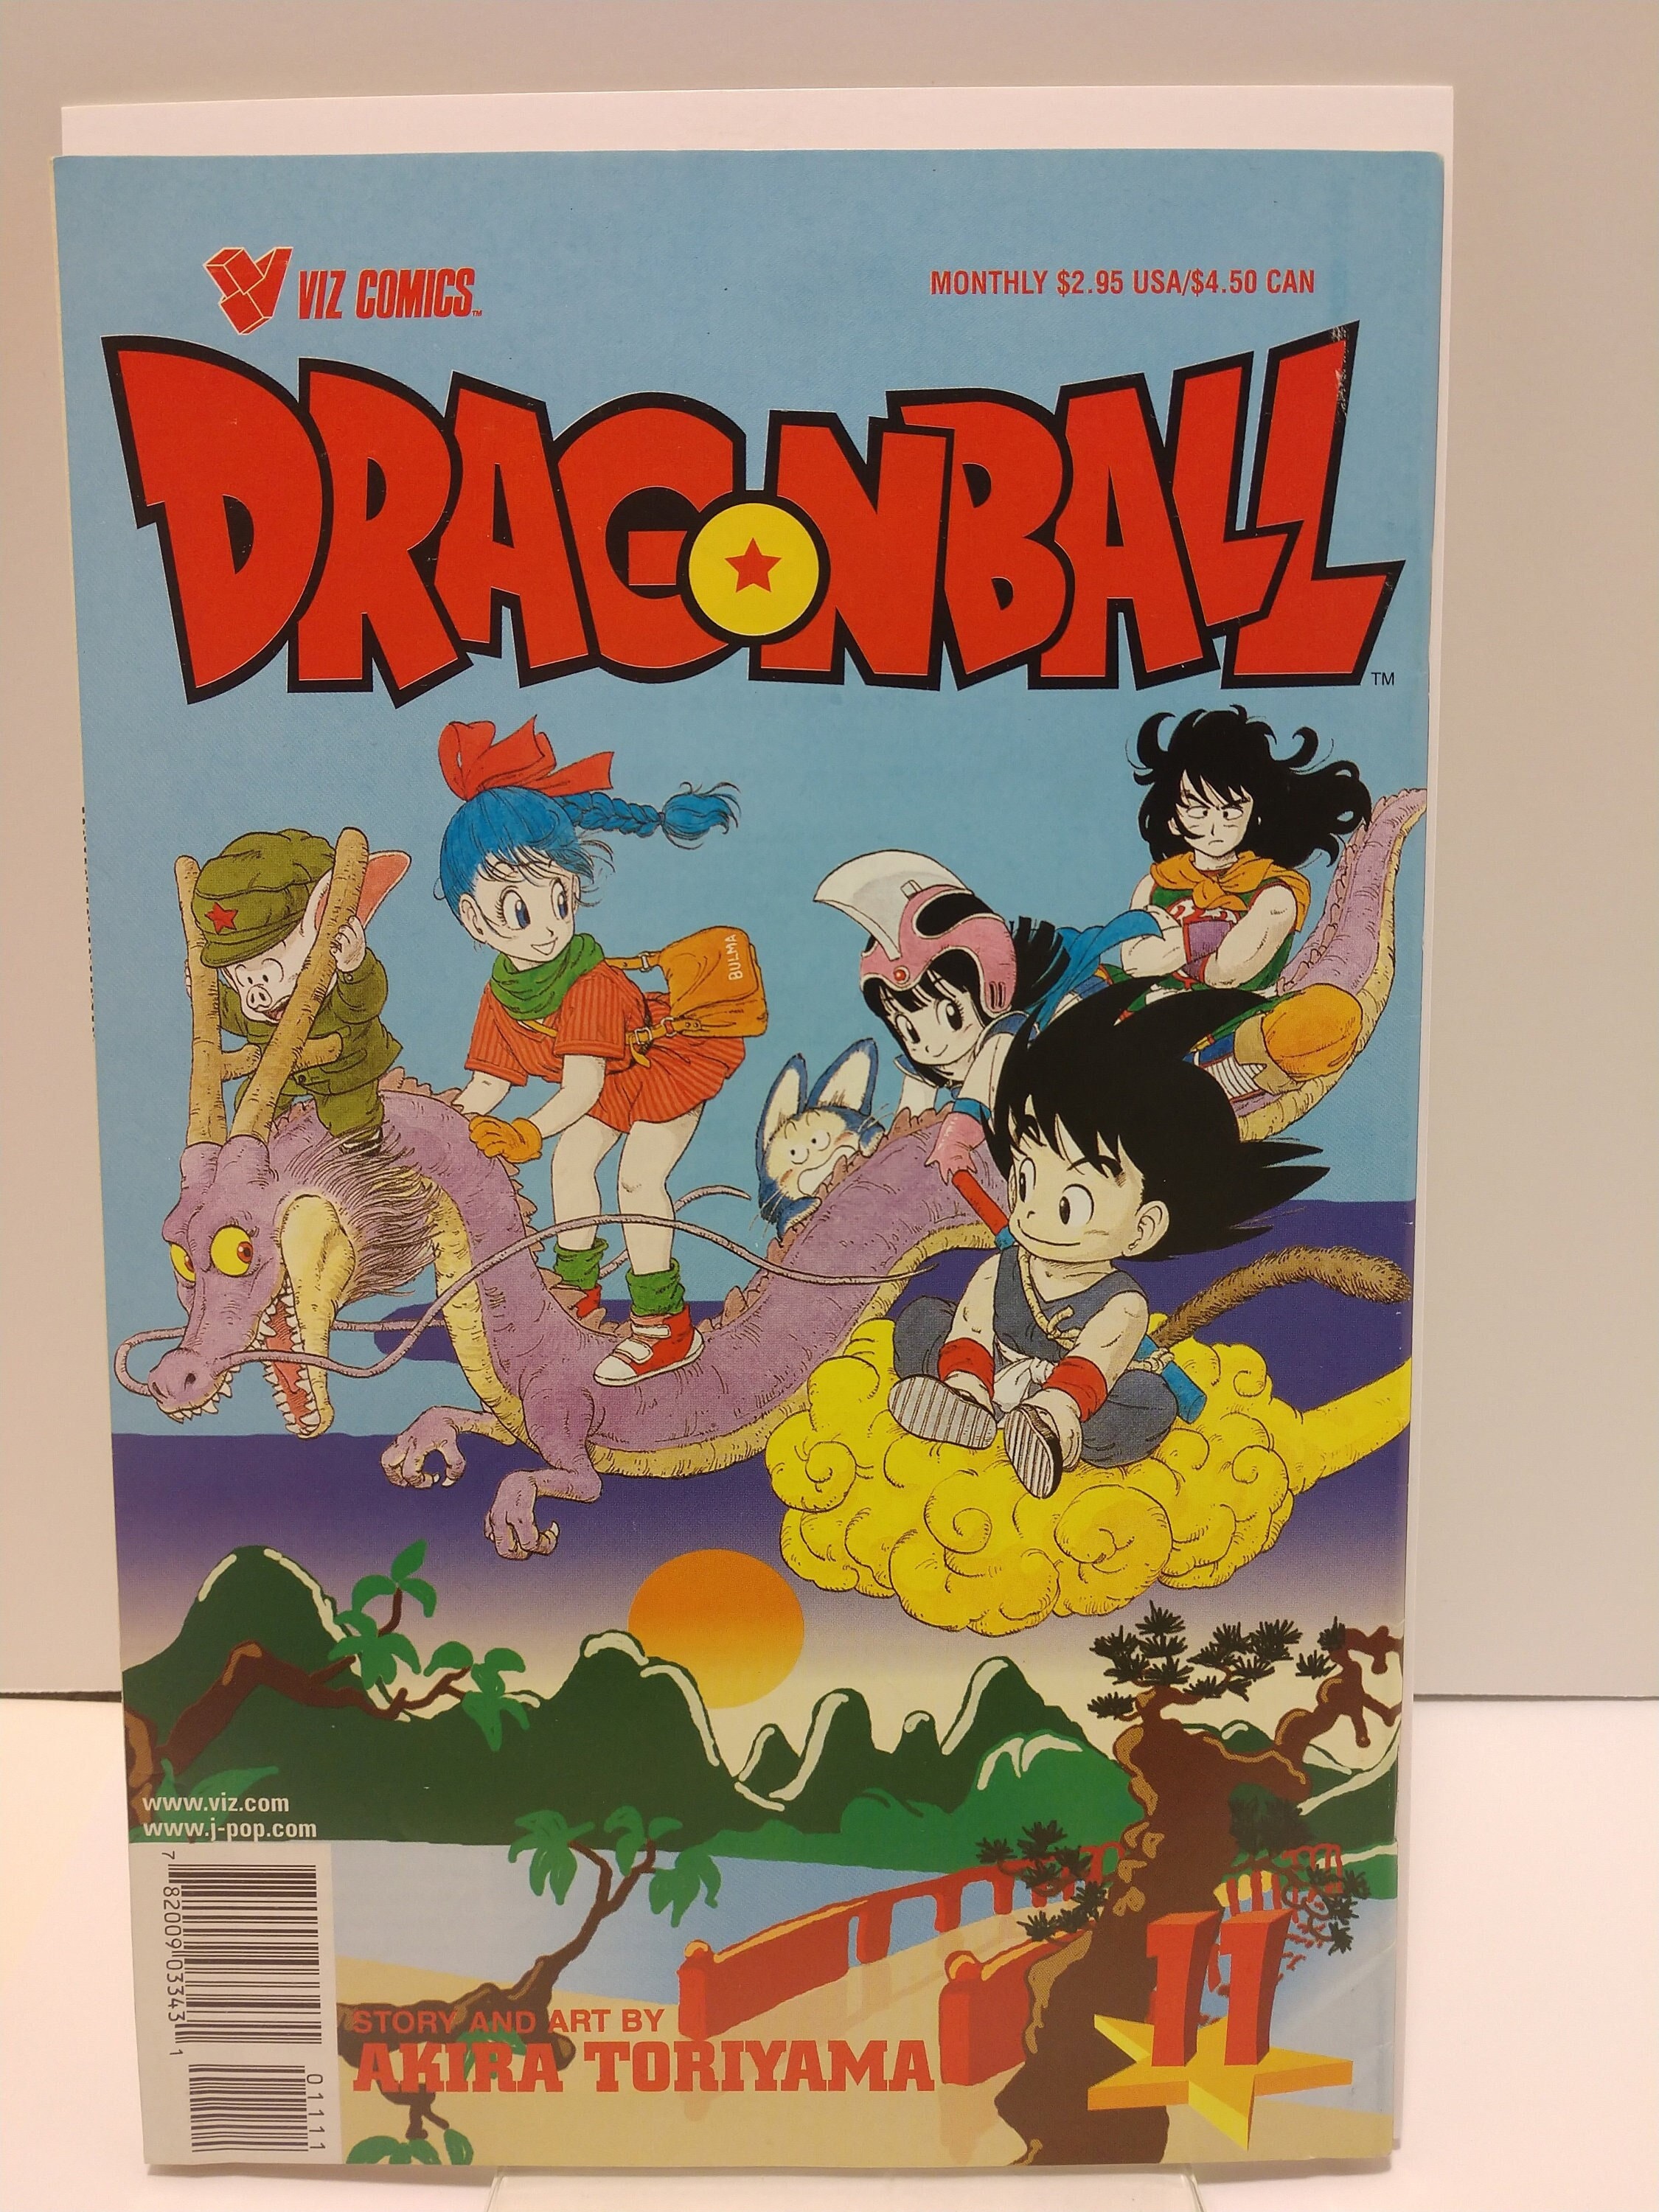 RetroballZ Dragon ball movie comic books